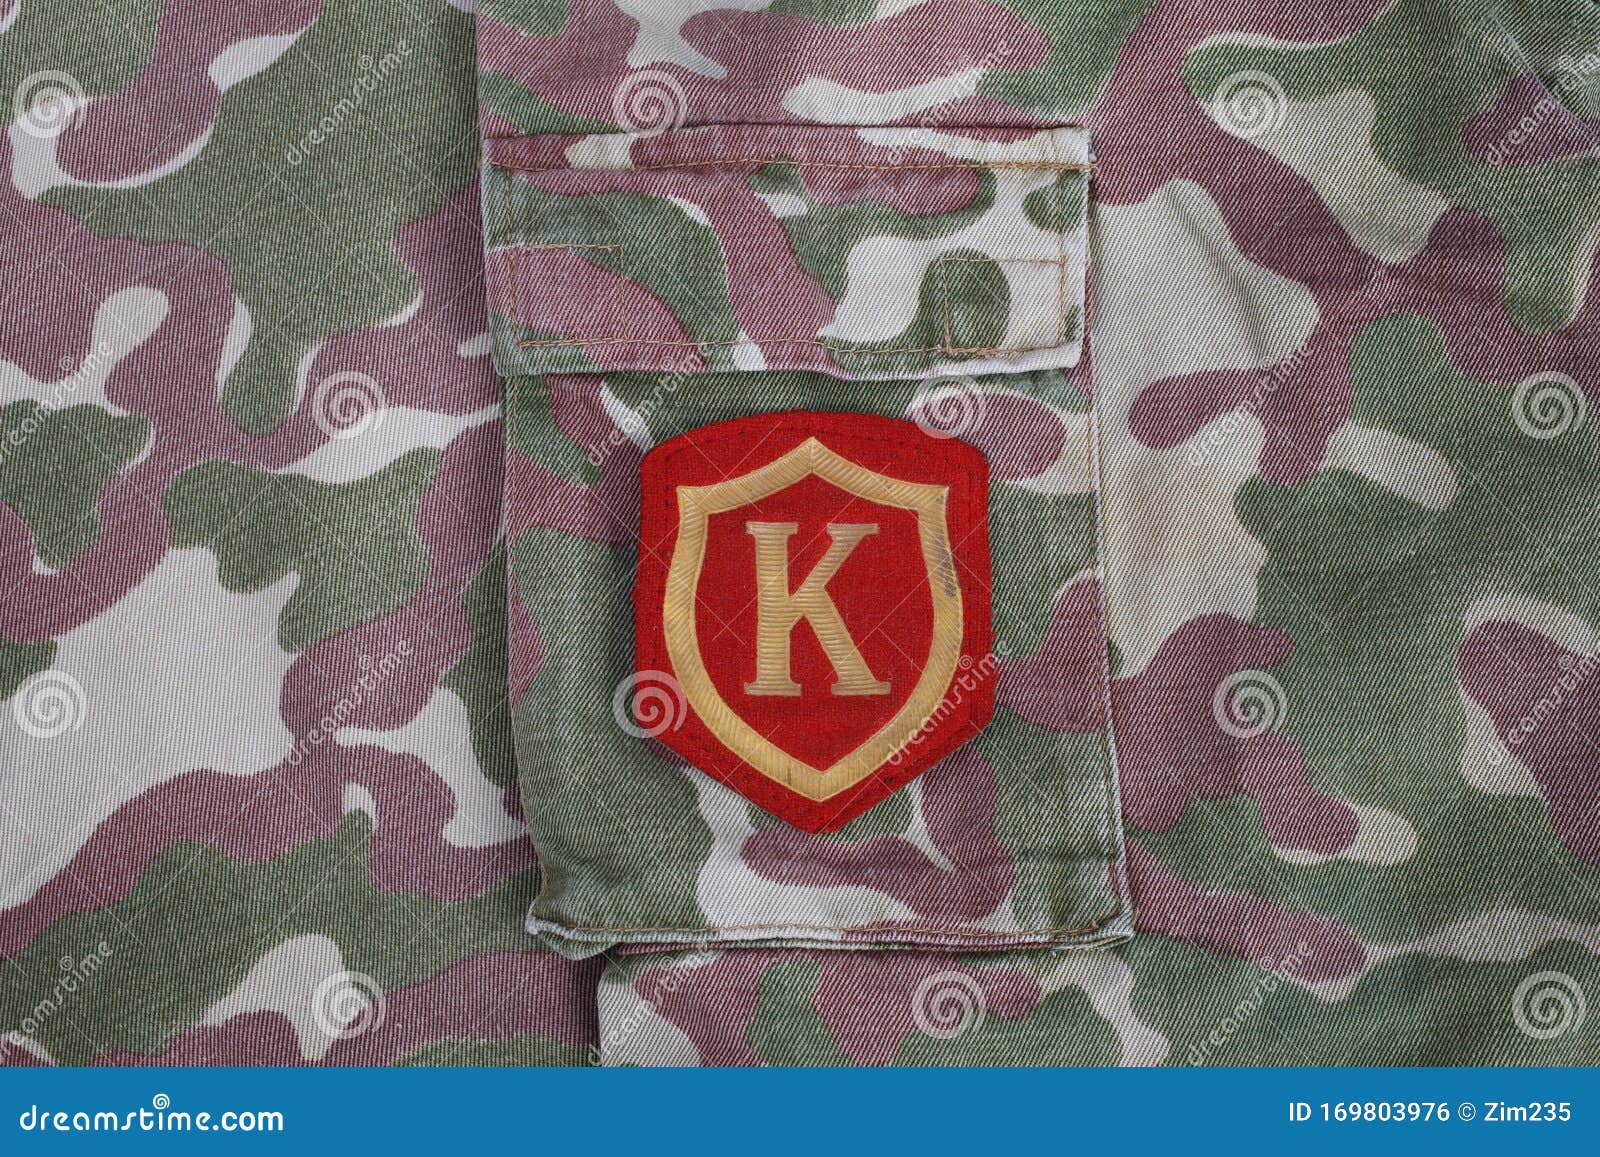 ussr military uniform - soviet army commandant shoulder patch on camouflage uniform background